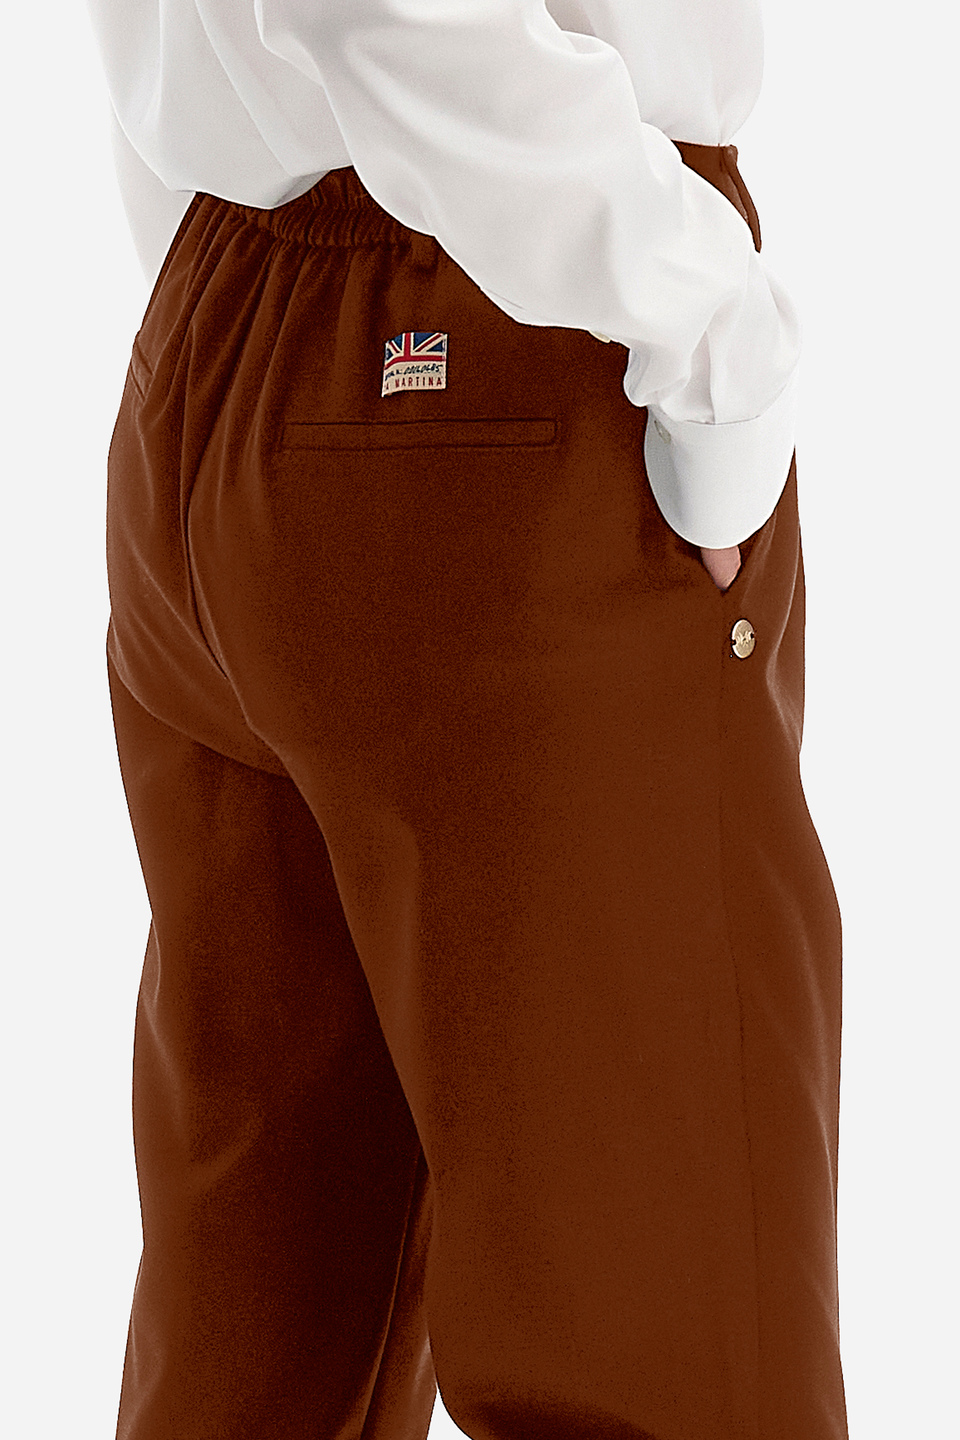 Women's trousers in a regular fit - Willena | La Martina - Official Online Shop